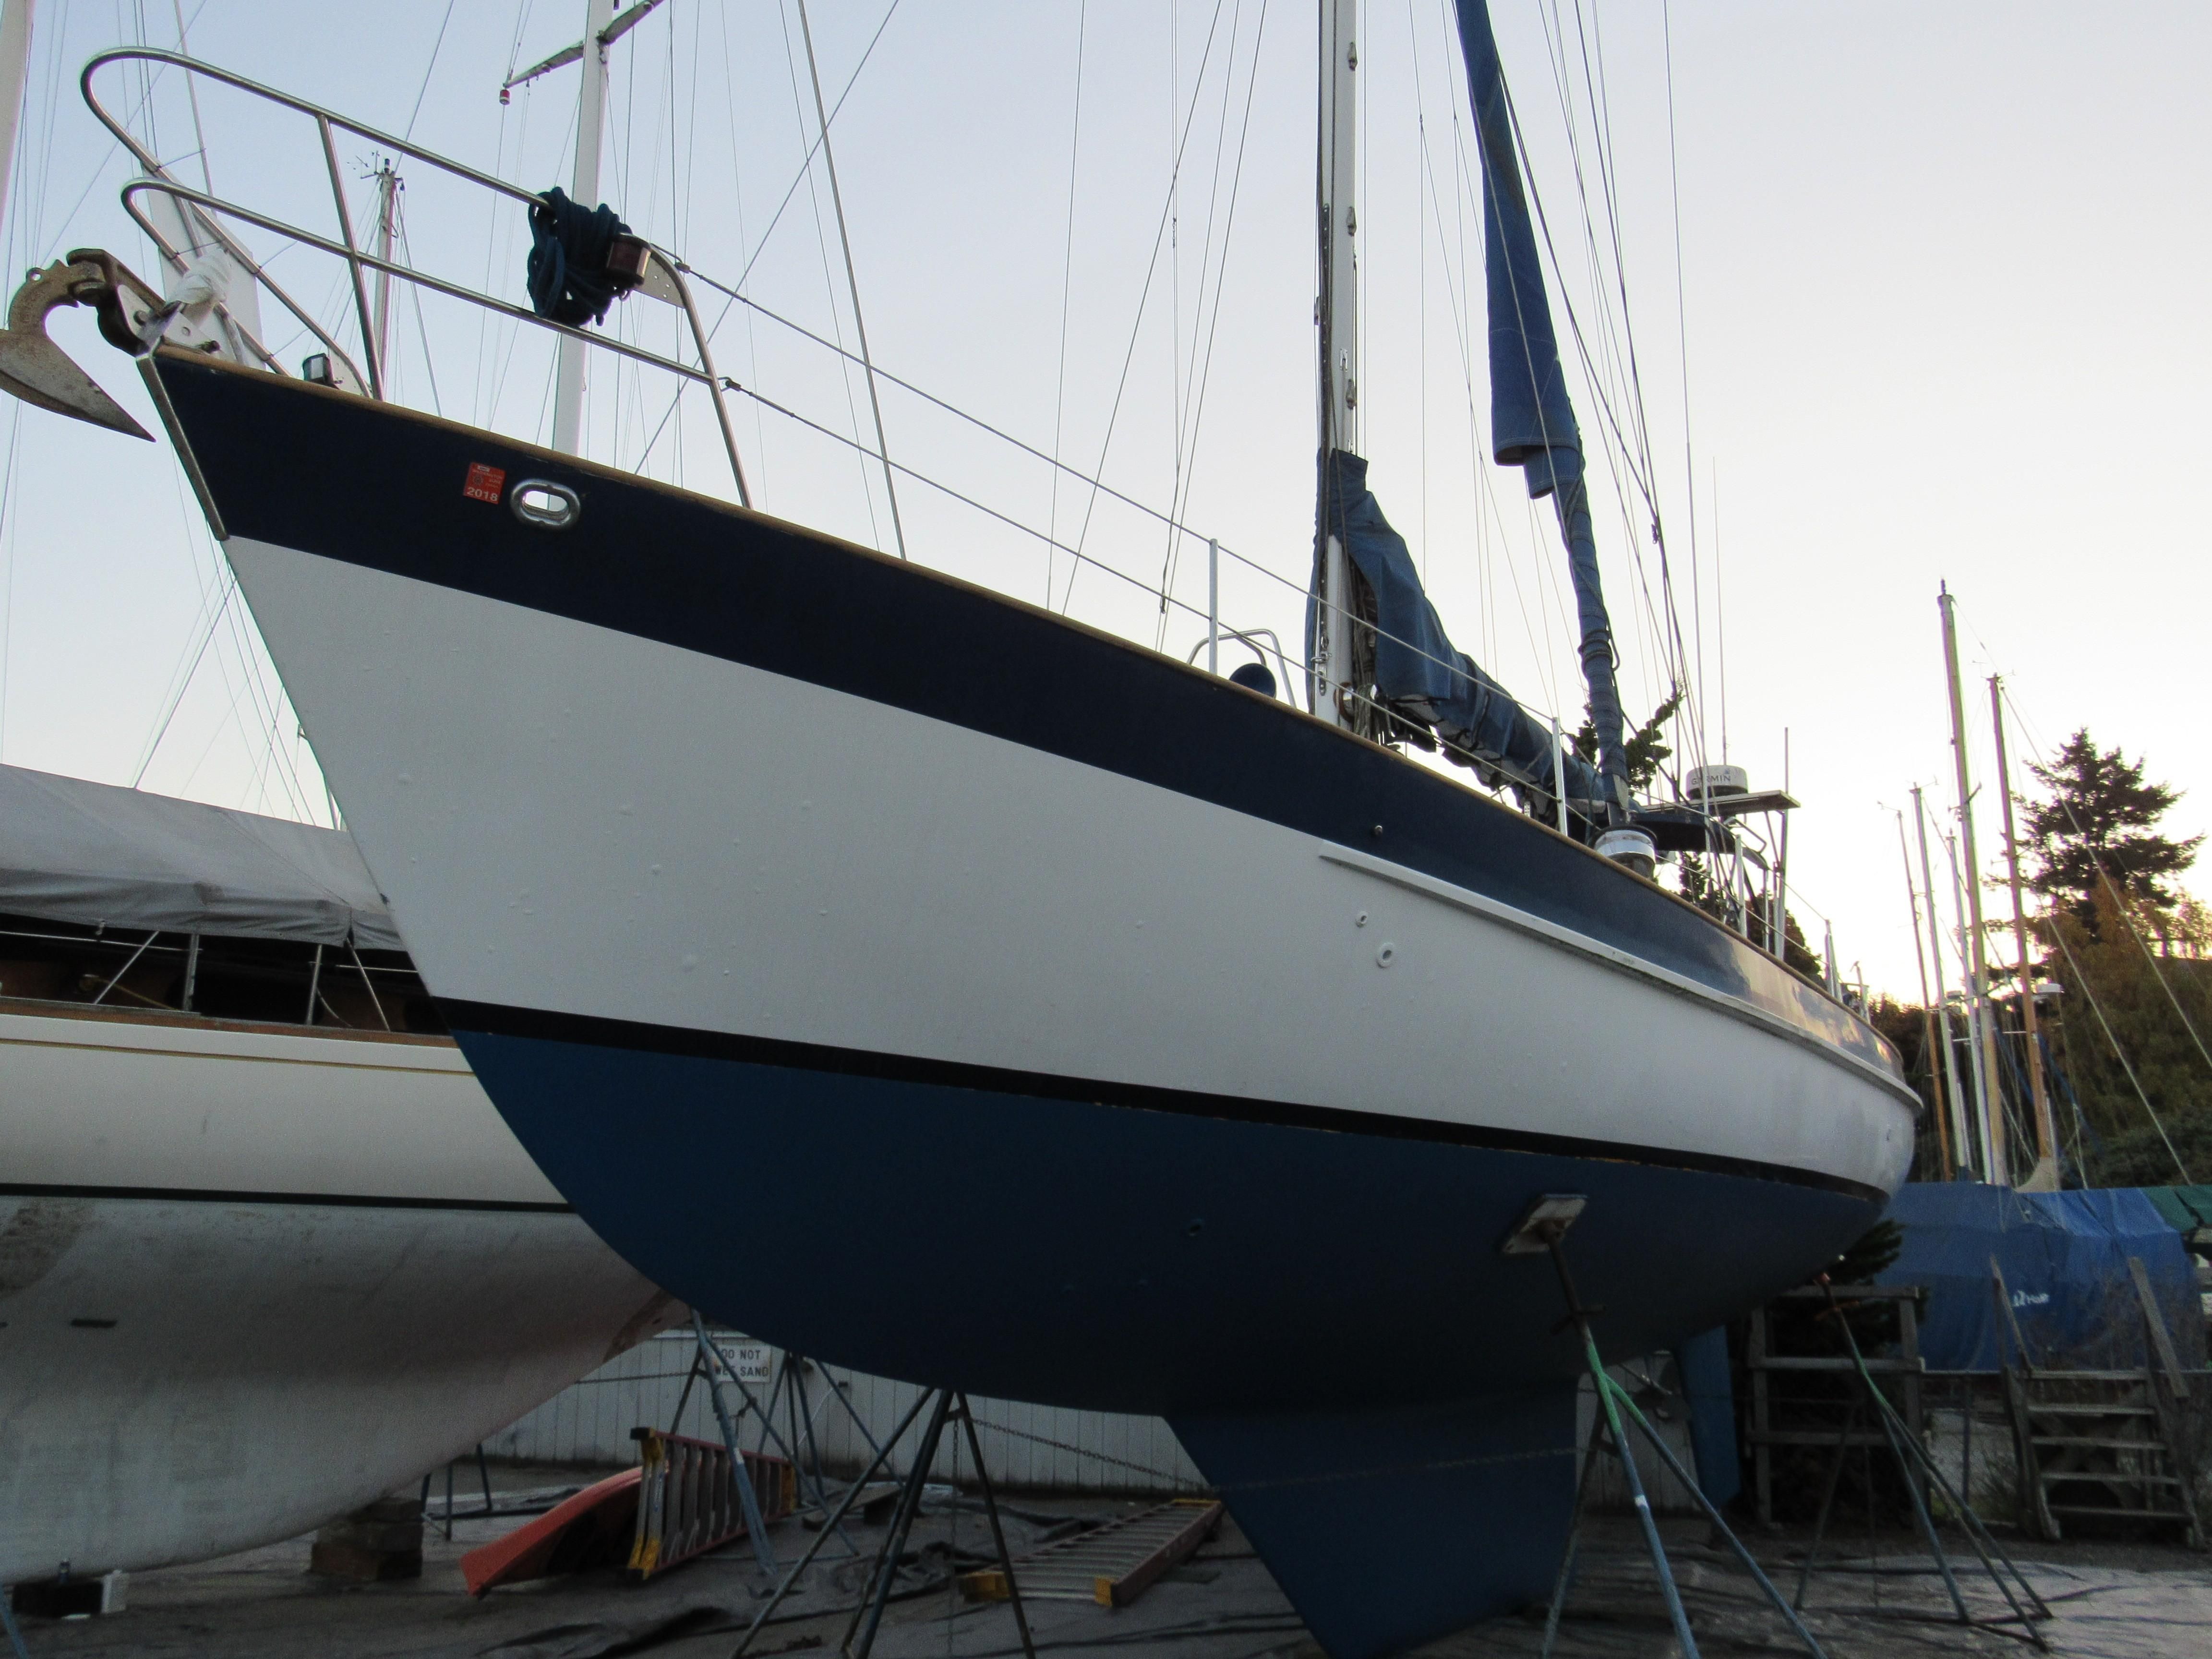 valiant 40 sailboat for sale